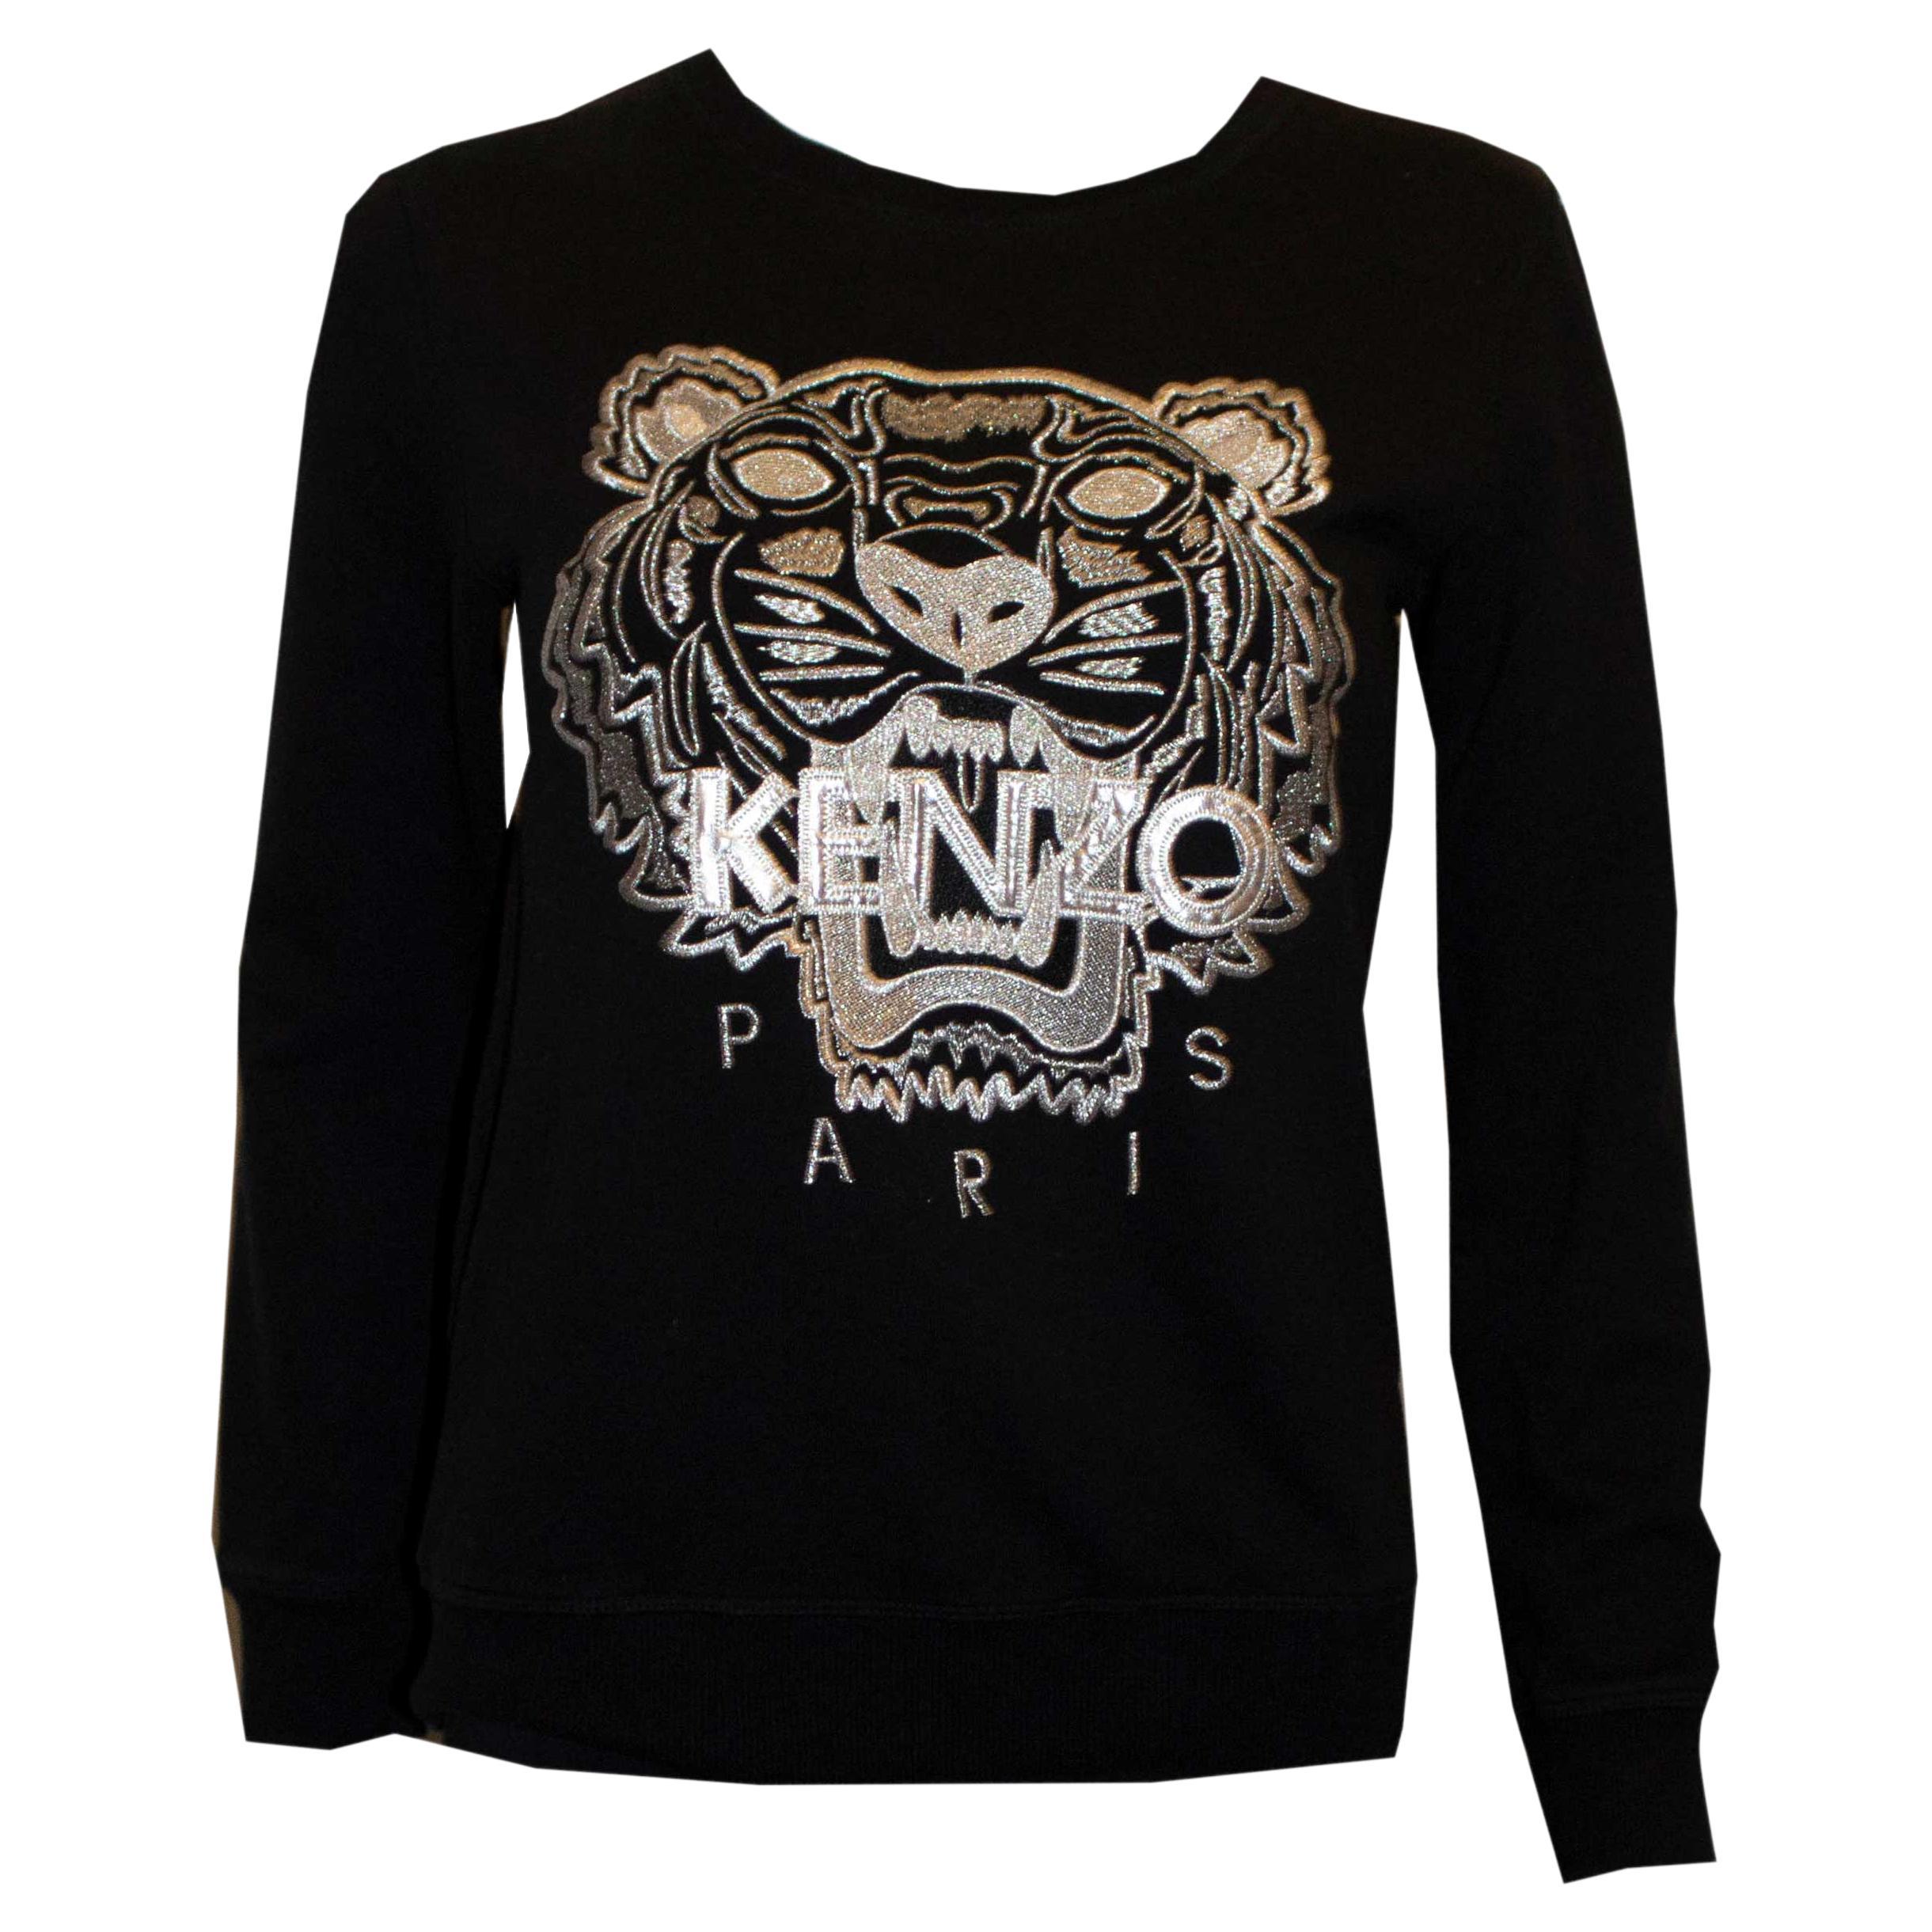 Kenzo Paris Black Sweatshirt with Silver Embroidery